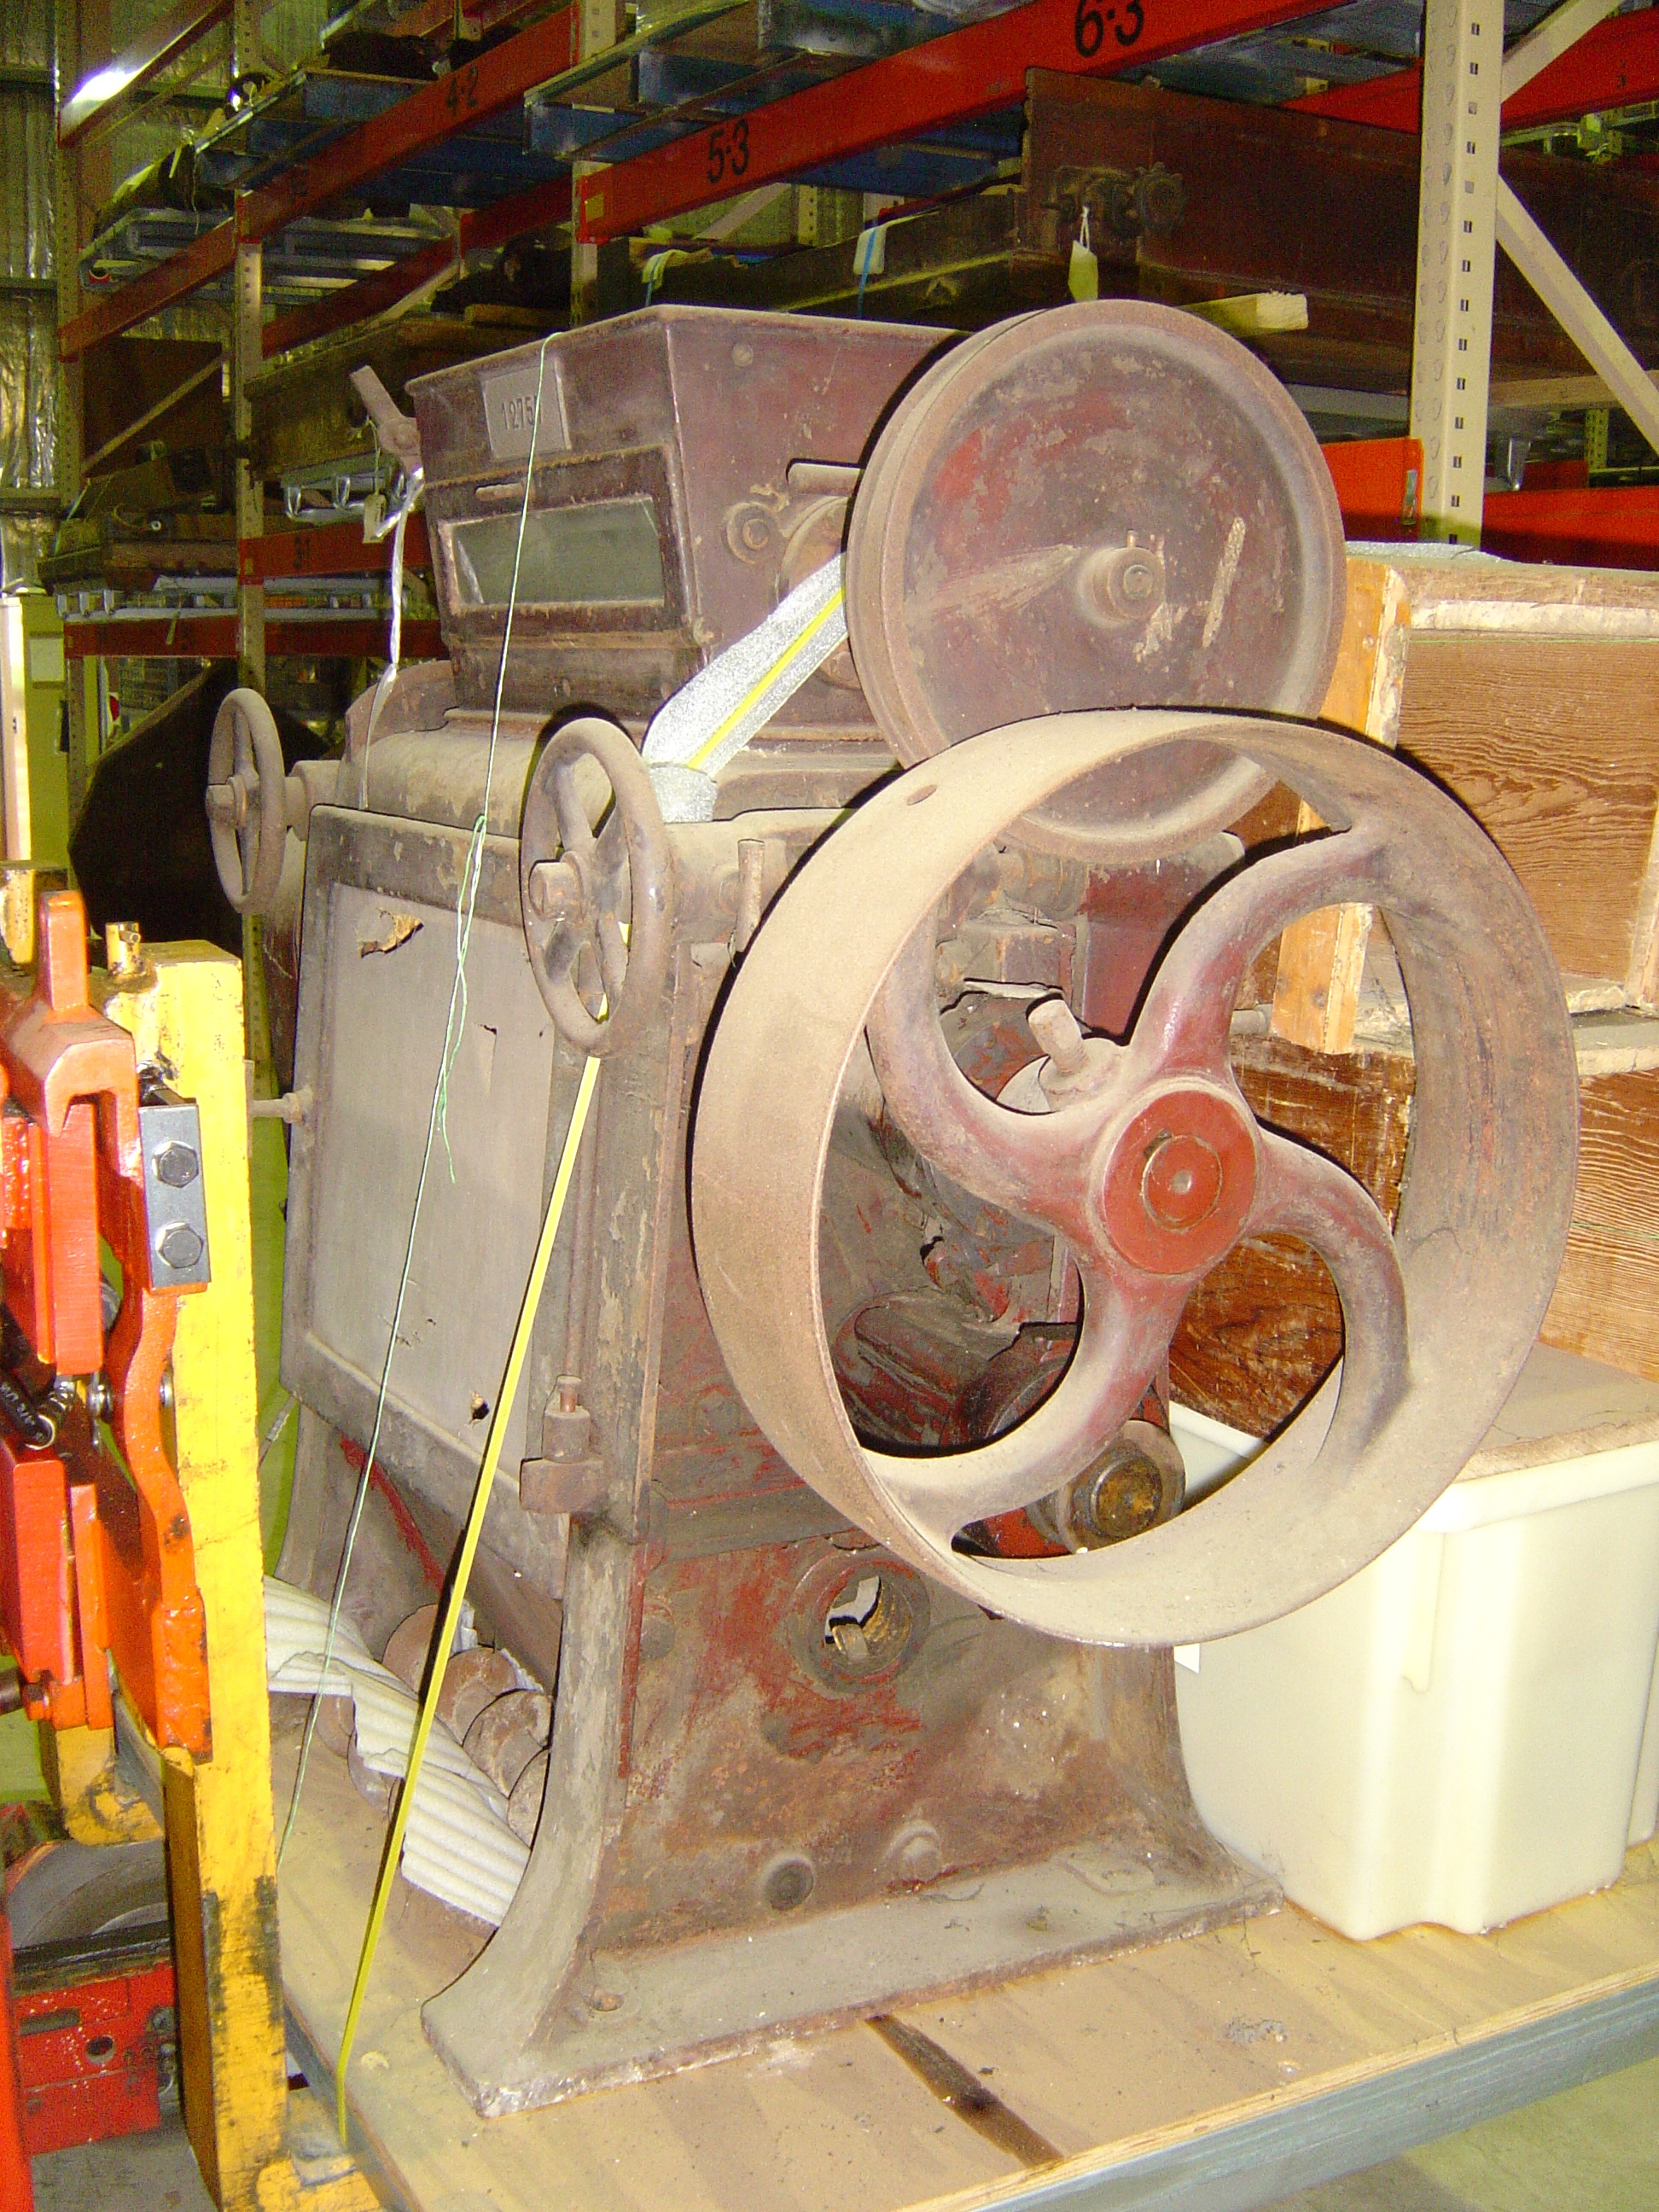 Robinson's flour mill equipment from McIntyre's mill, Hamilton, NSW